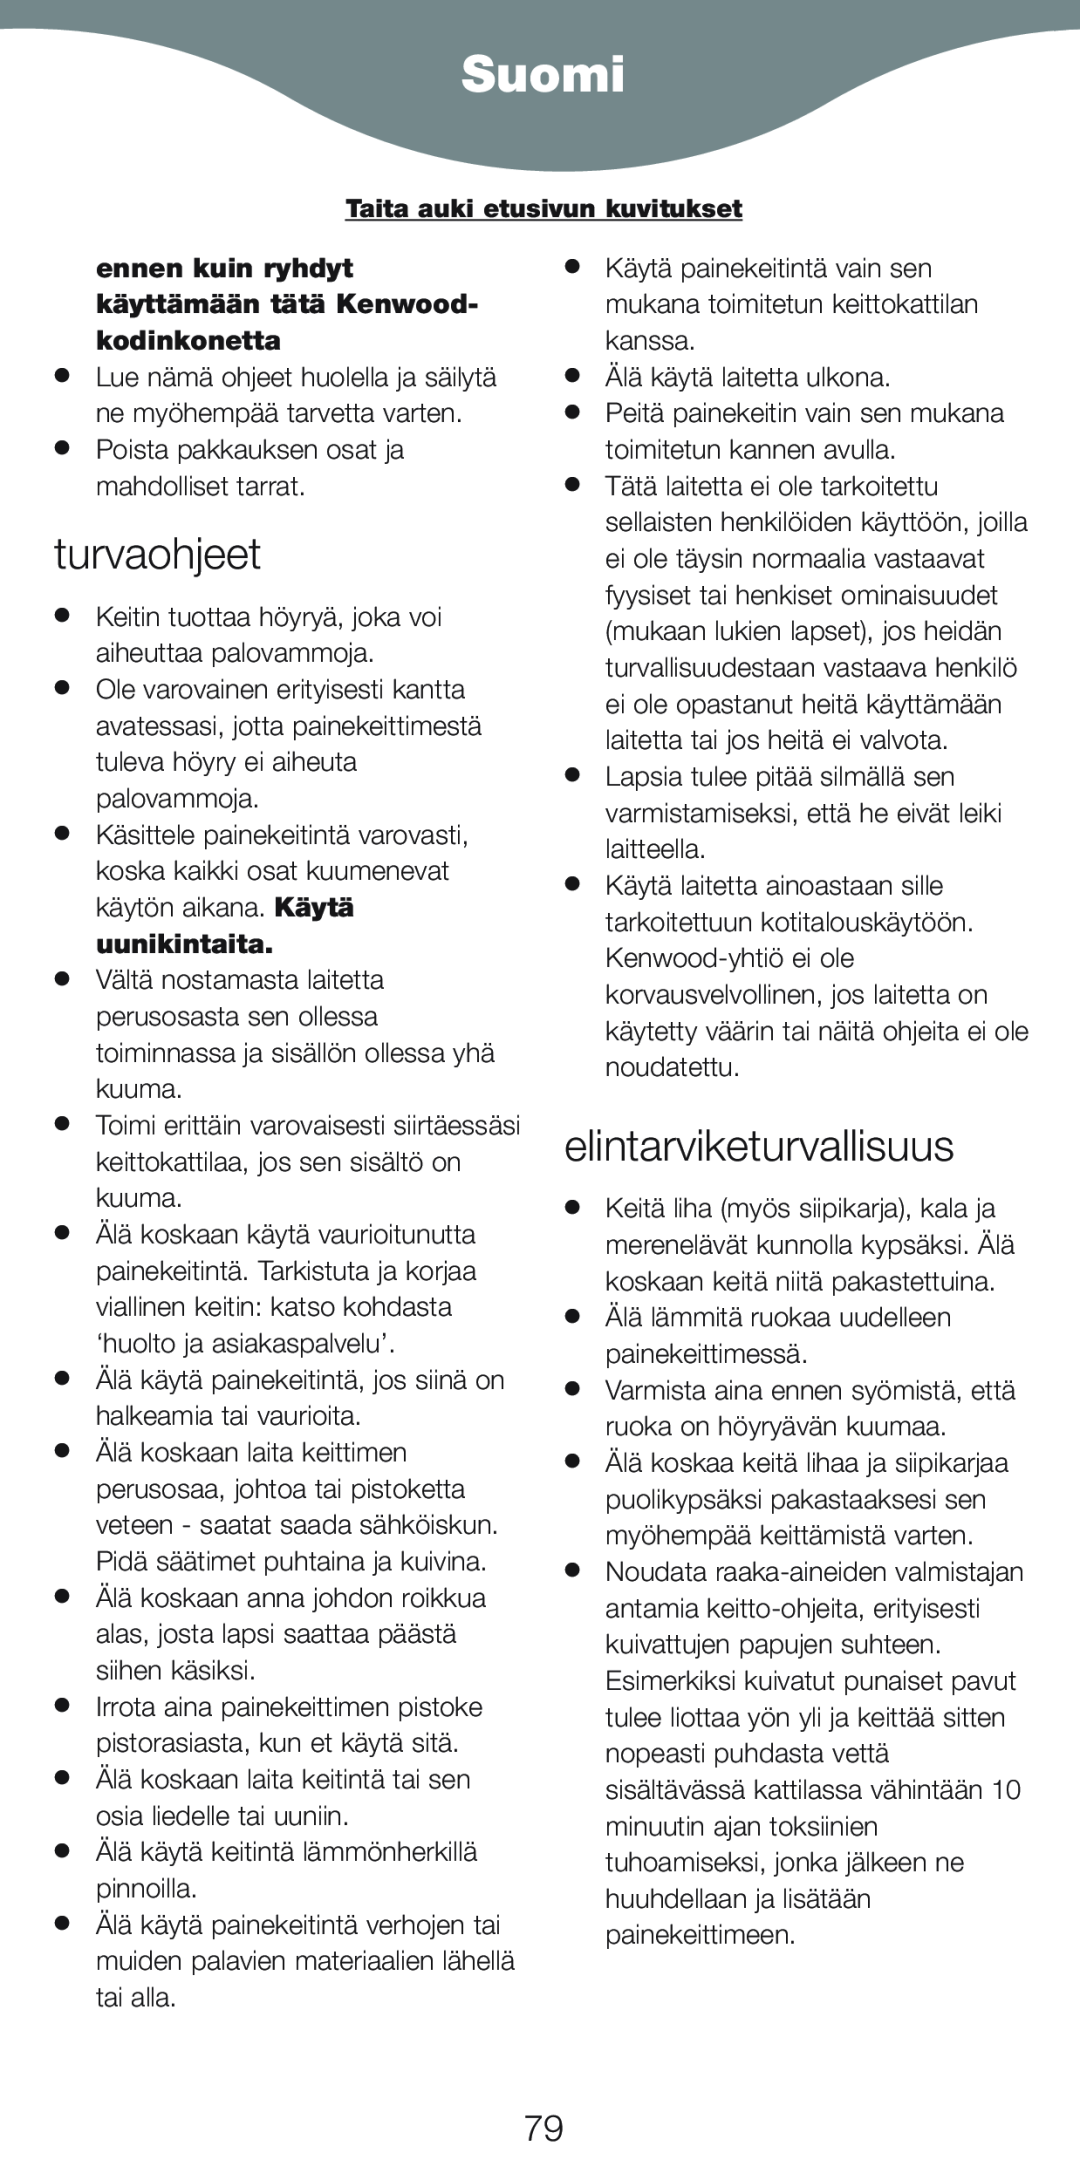 Kenwood CP707, CP706 manual Suomi, turvaohjeet, elintarviketurvallisuus 